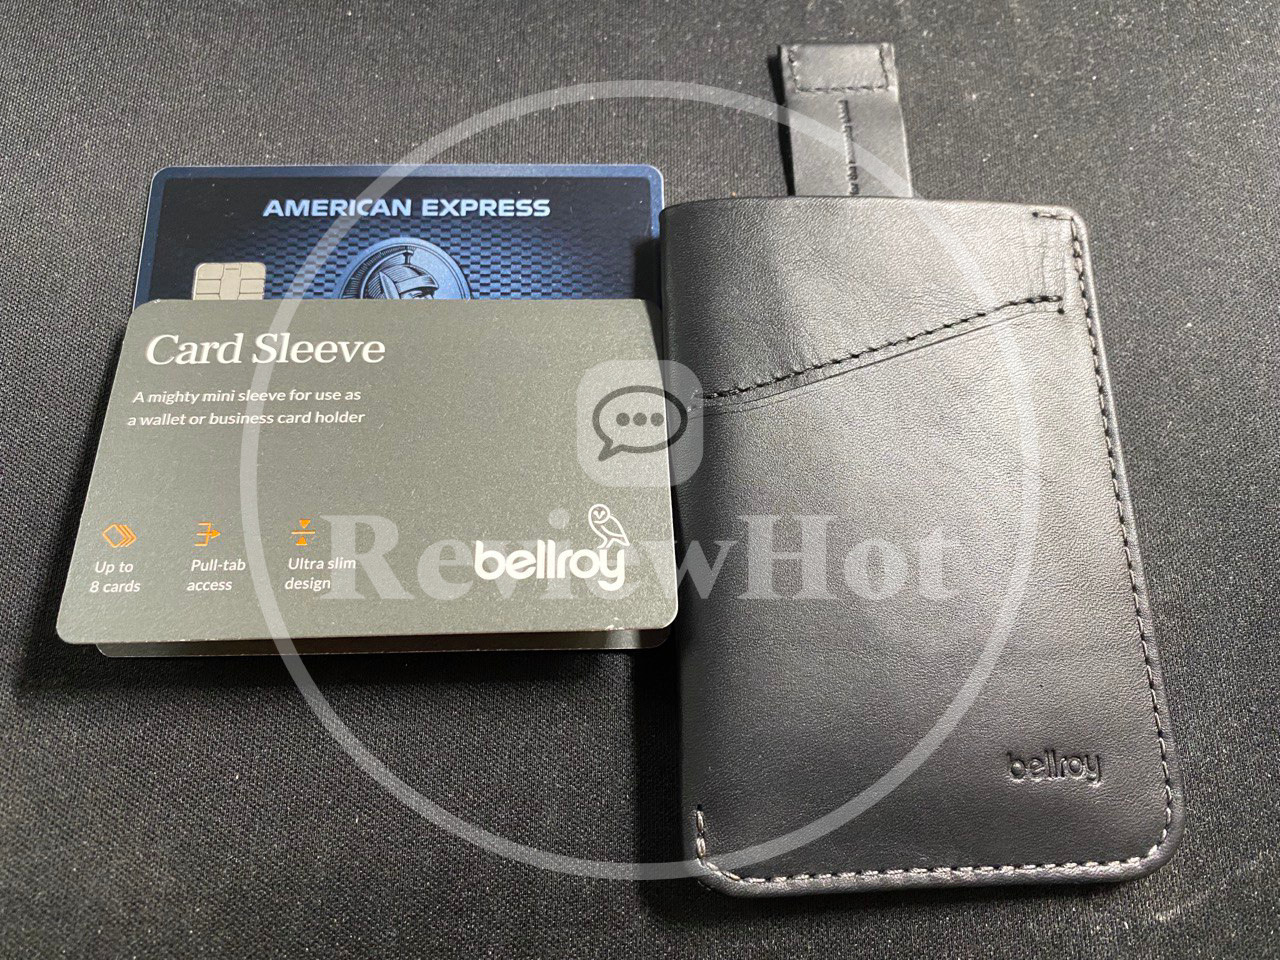 Bellroy Card Sleeve Wallet Slim Version Review